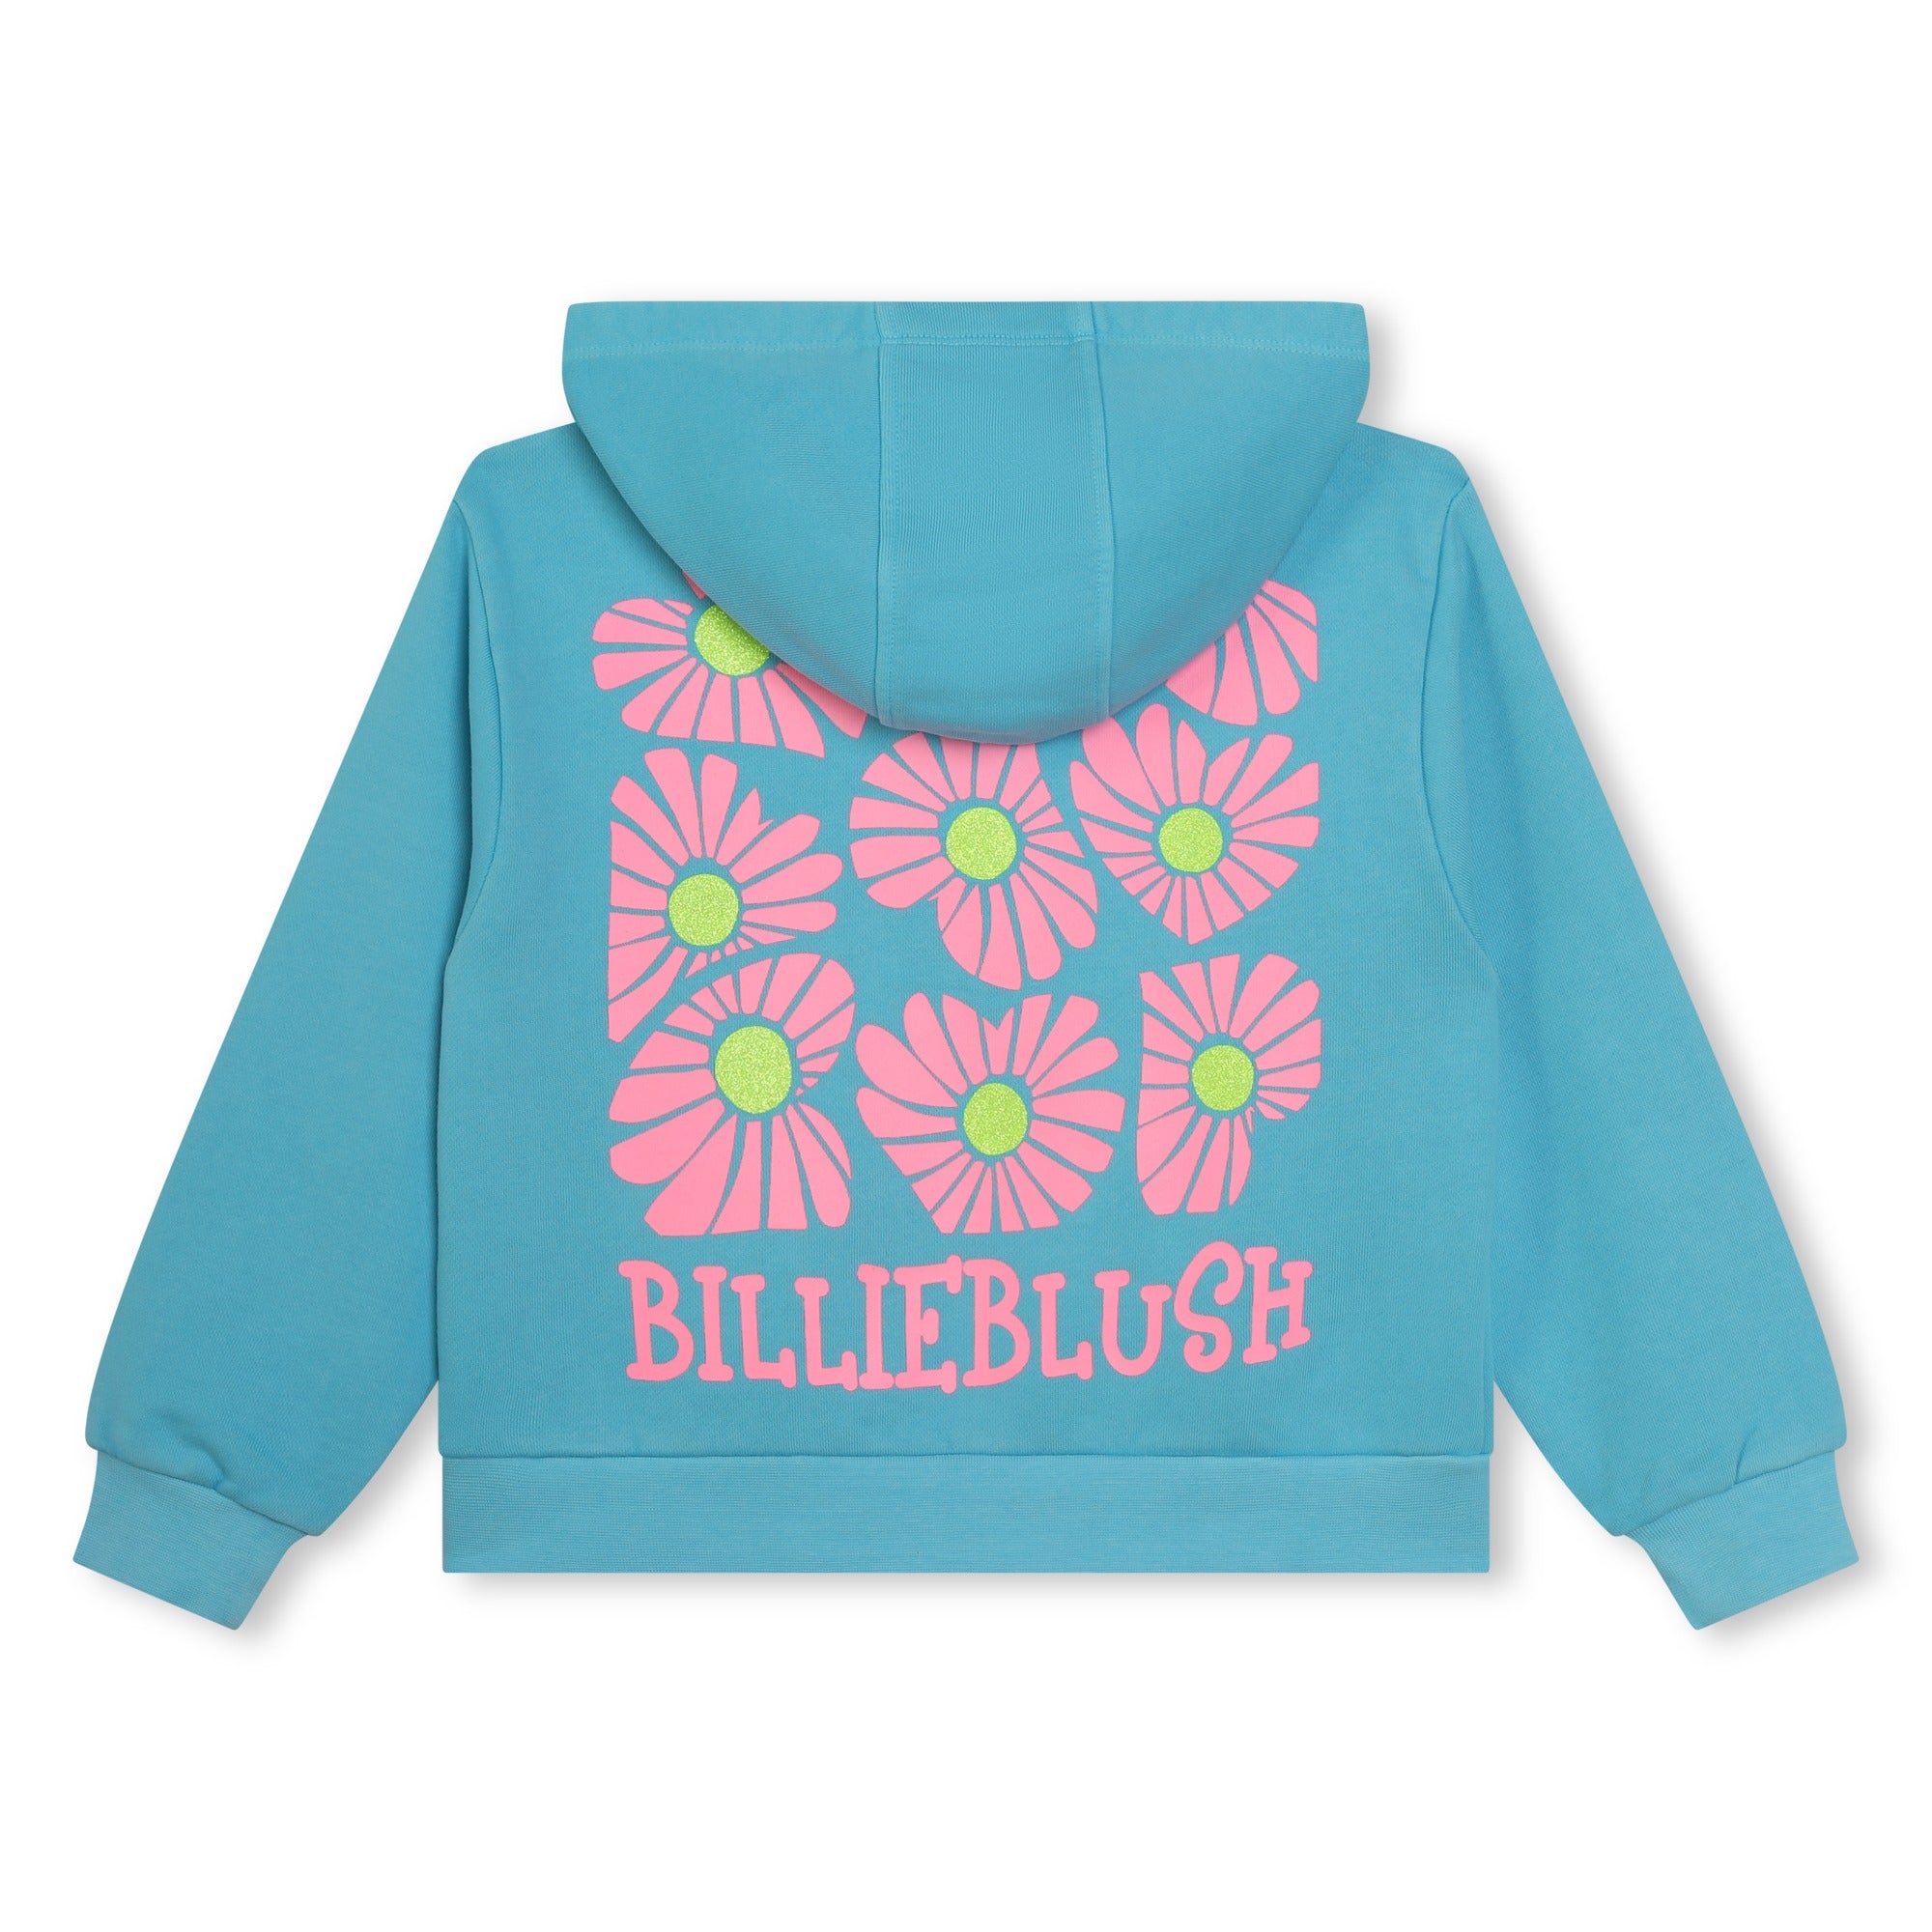 Billieblush Turquoise Sweatshirt